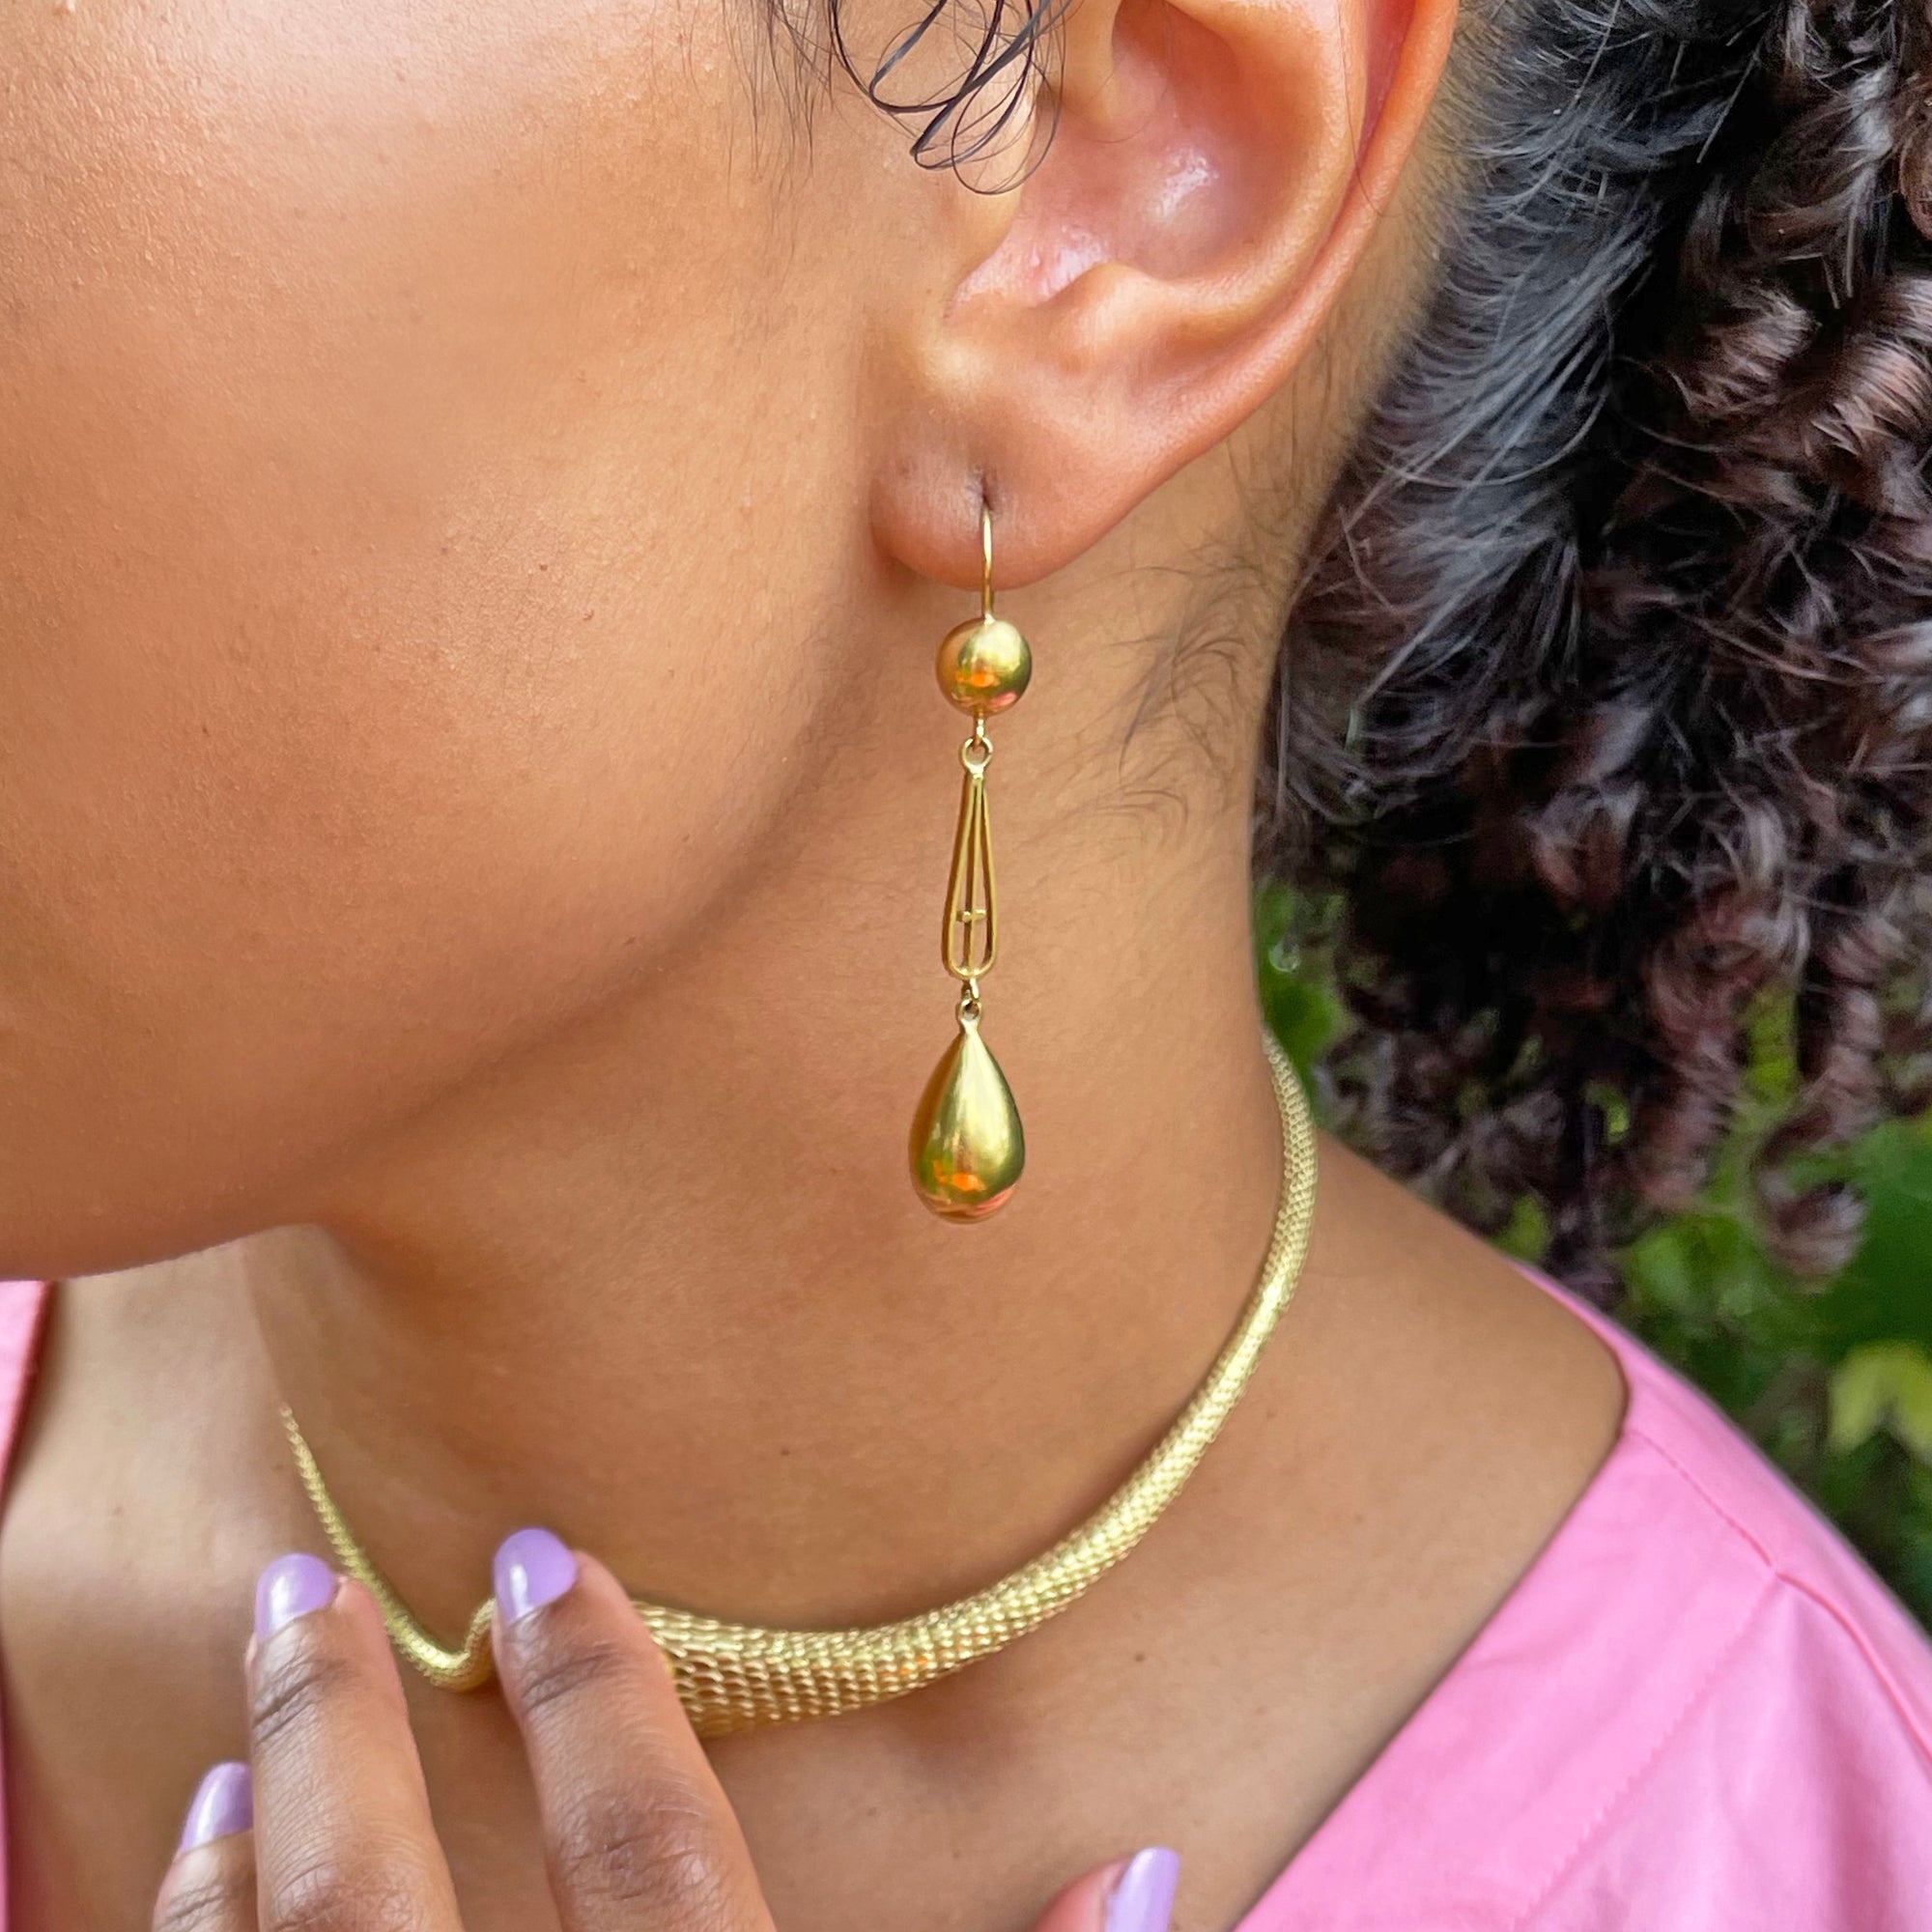 Antique Gold Drop Earrings